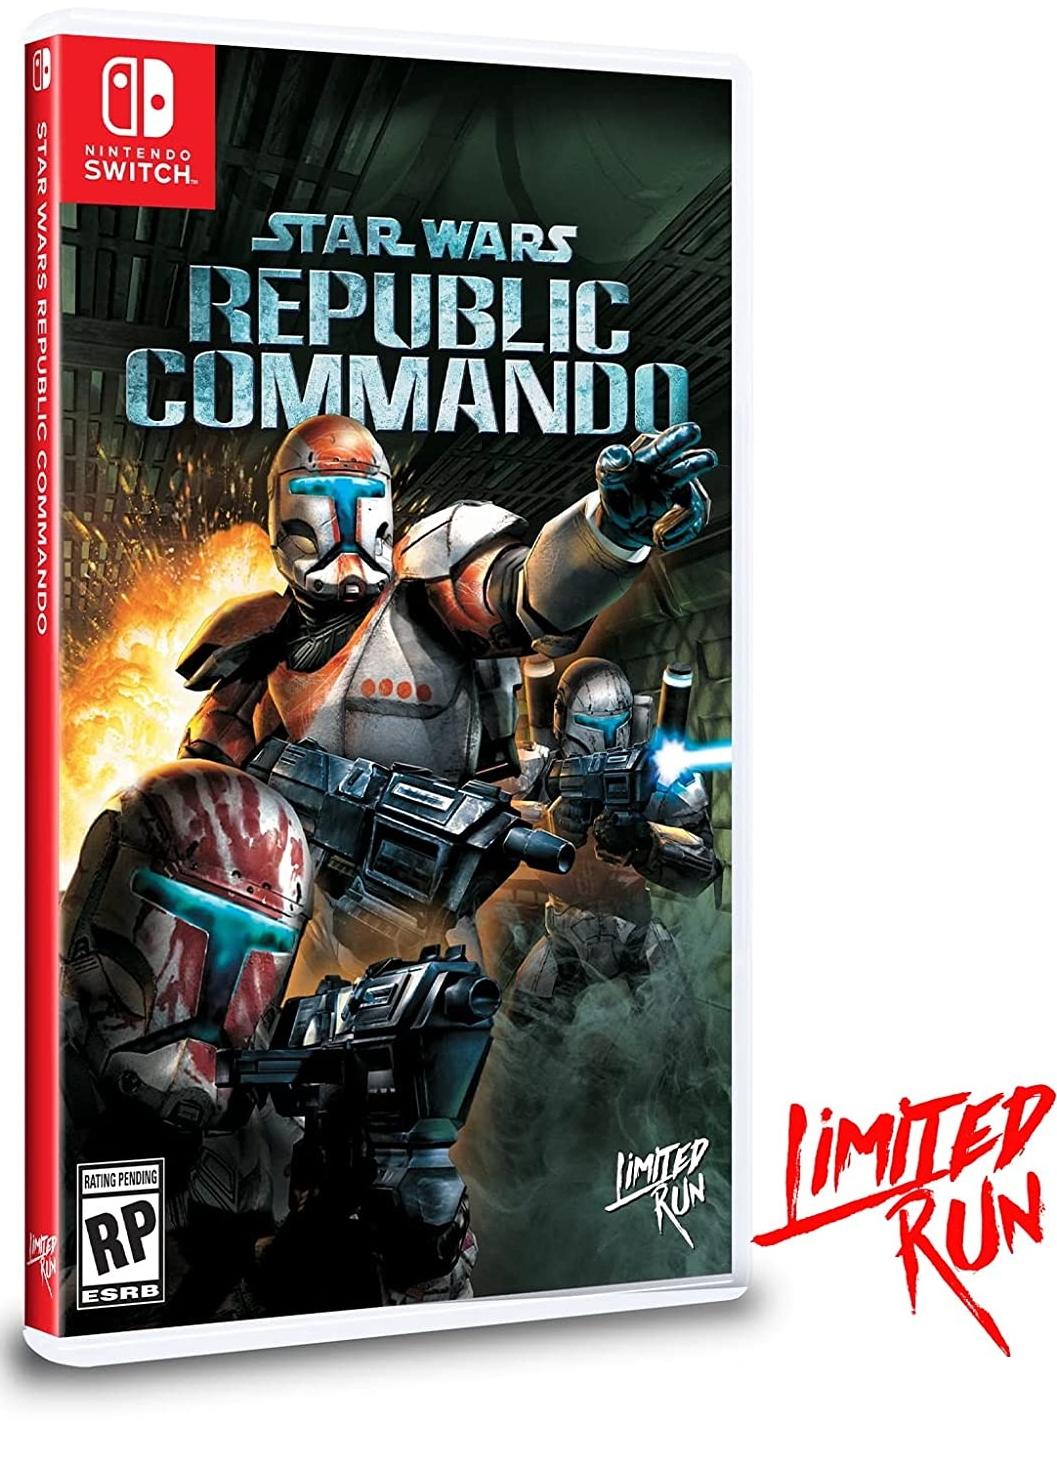 Star Wars: Republic Commando (Limited Run) (Switch)